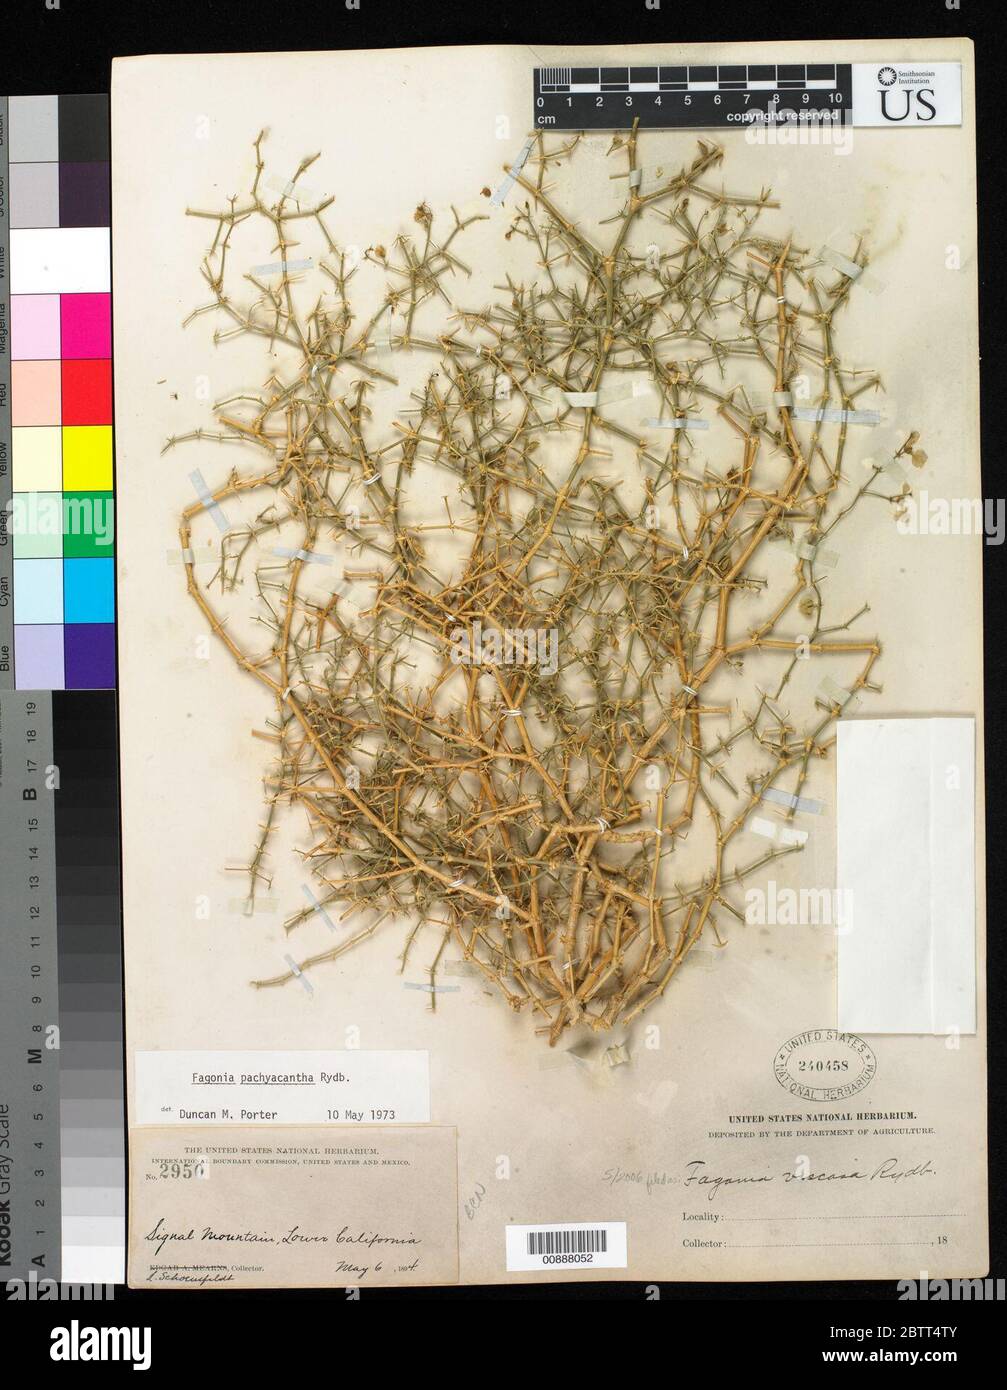 Fagonia viscosa Rydb. Stock Photo